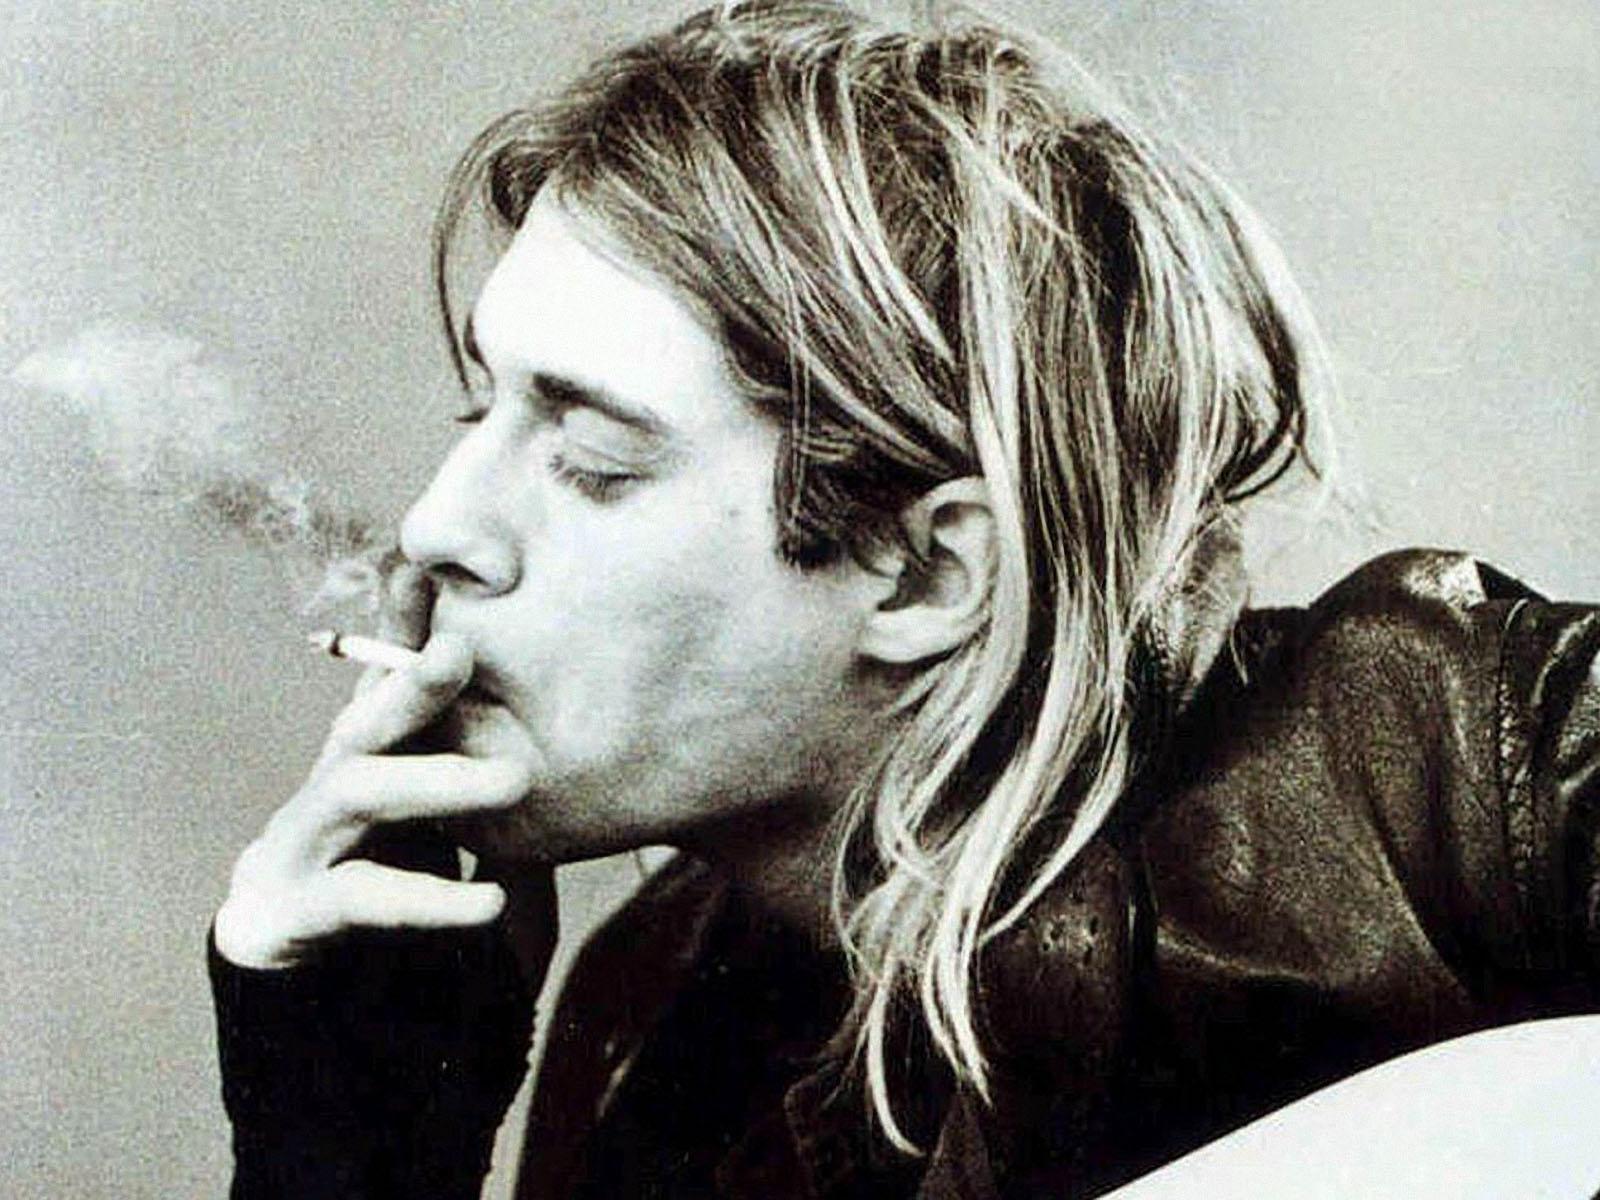 Kurt Cobain1 Wallpapers,Kurt Cobain Wallpapers & Pictures Free ...